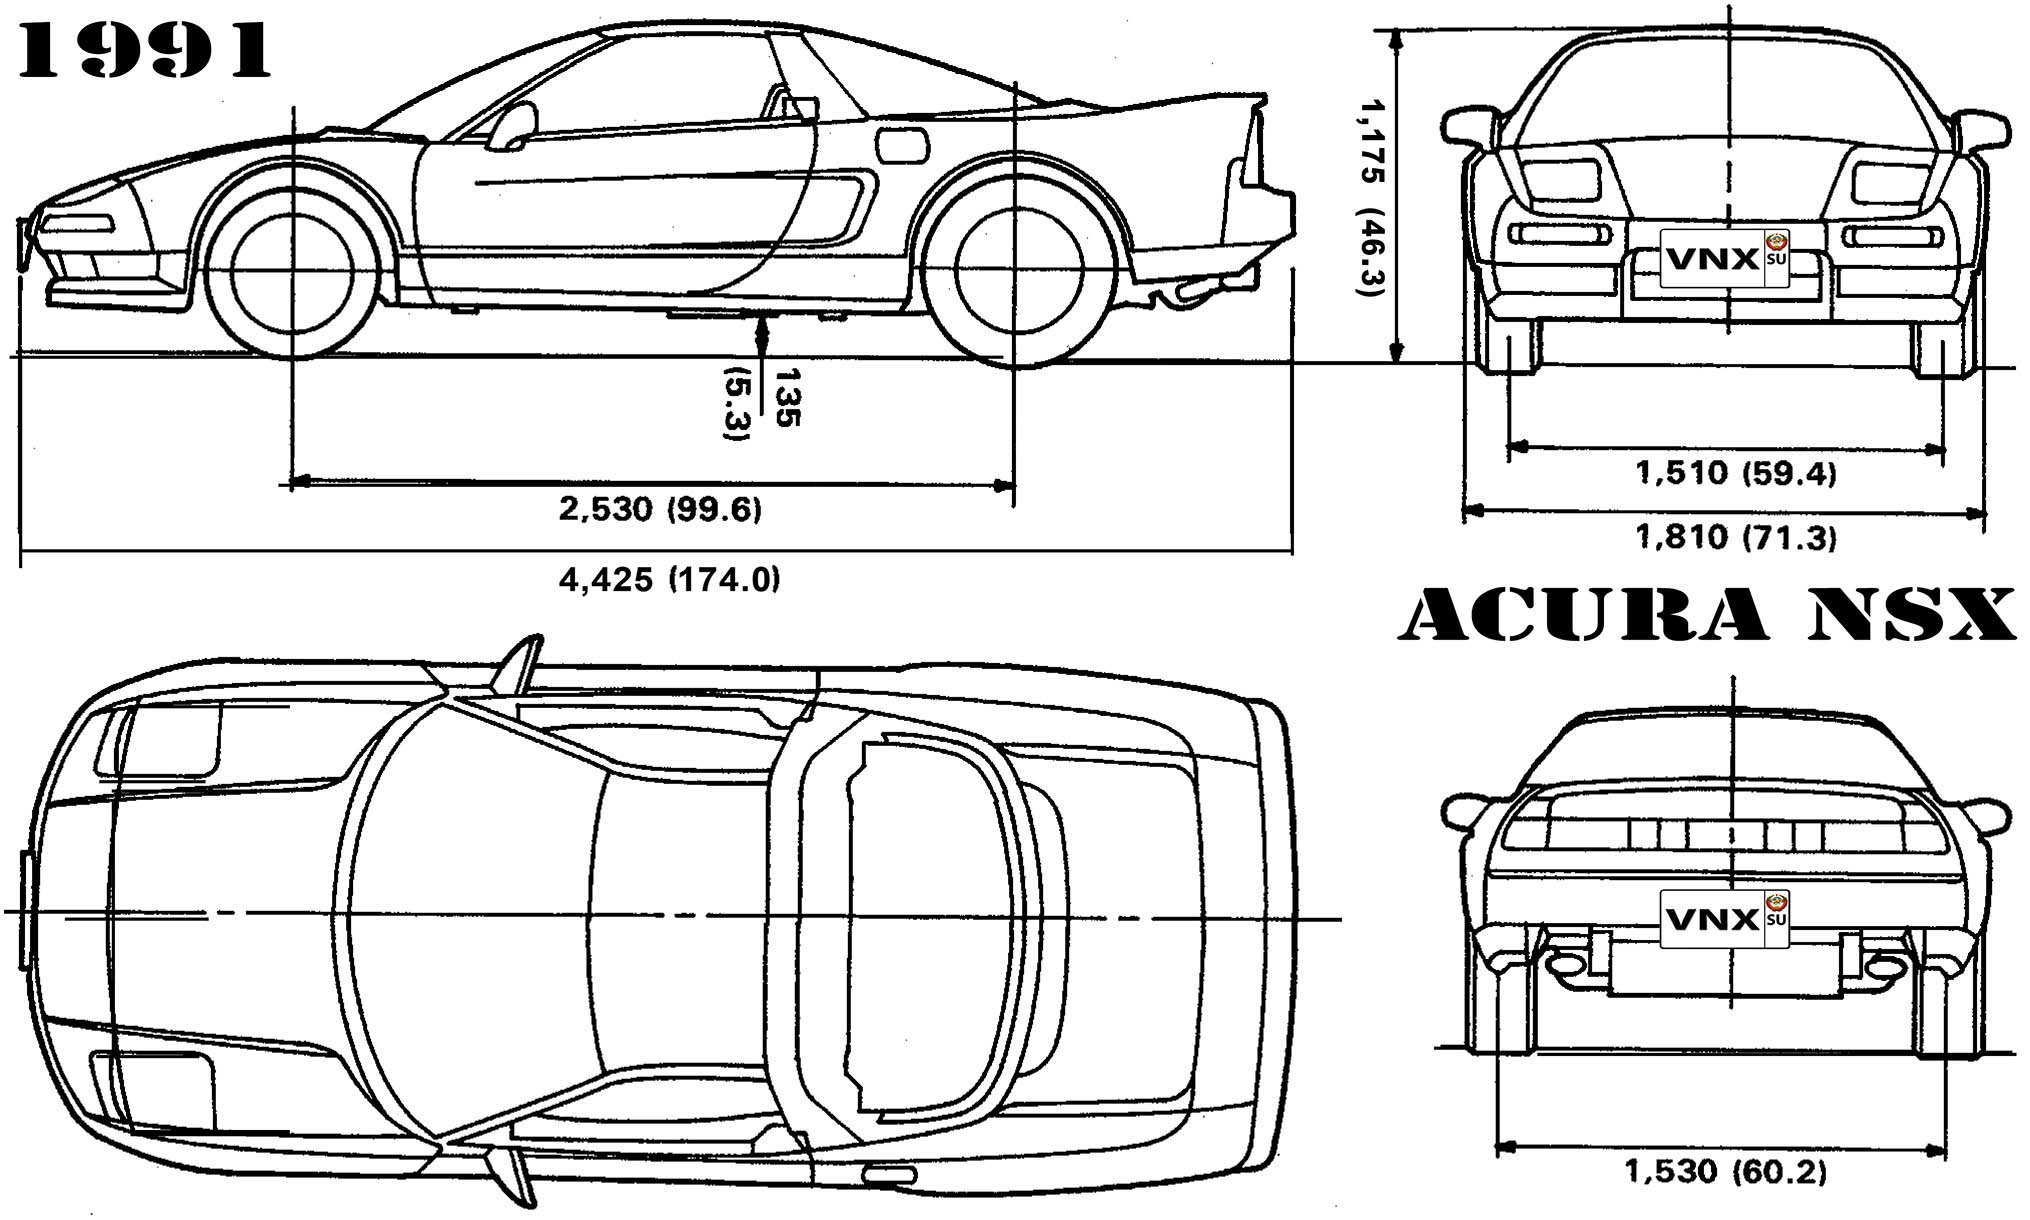 Габаритные размеры Акура НСиКс 1991 (dimensions Acura NSX Mark I)